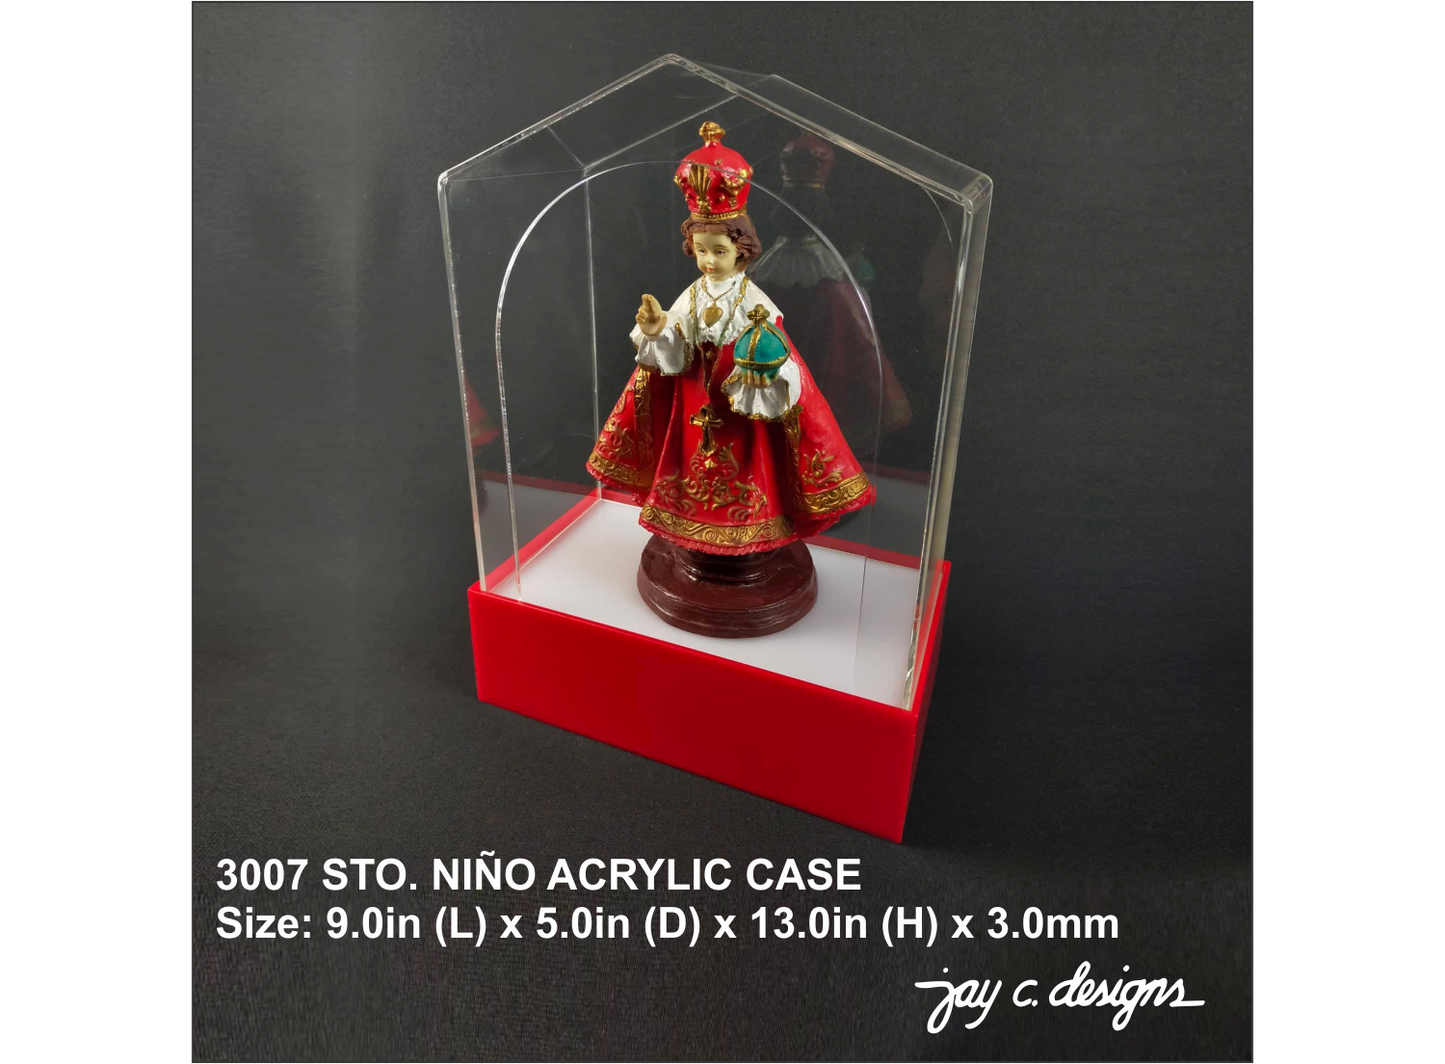 3007 Sto Niño Acrylic Case (9.0" (L) x 5.0" (D) x 13.0" (H) x 3.0mm)